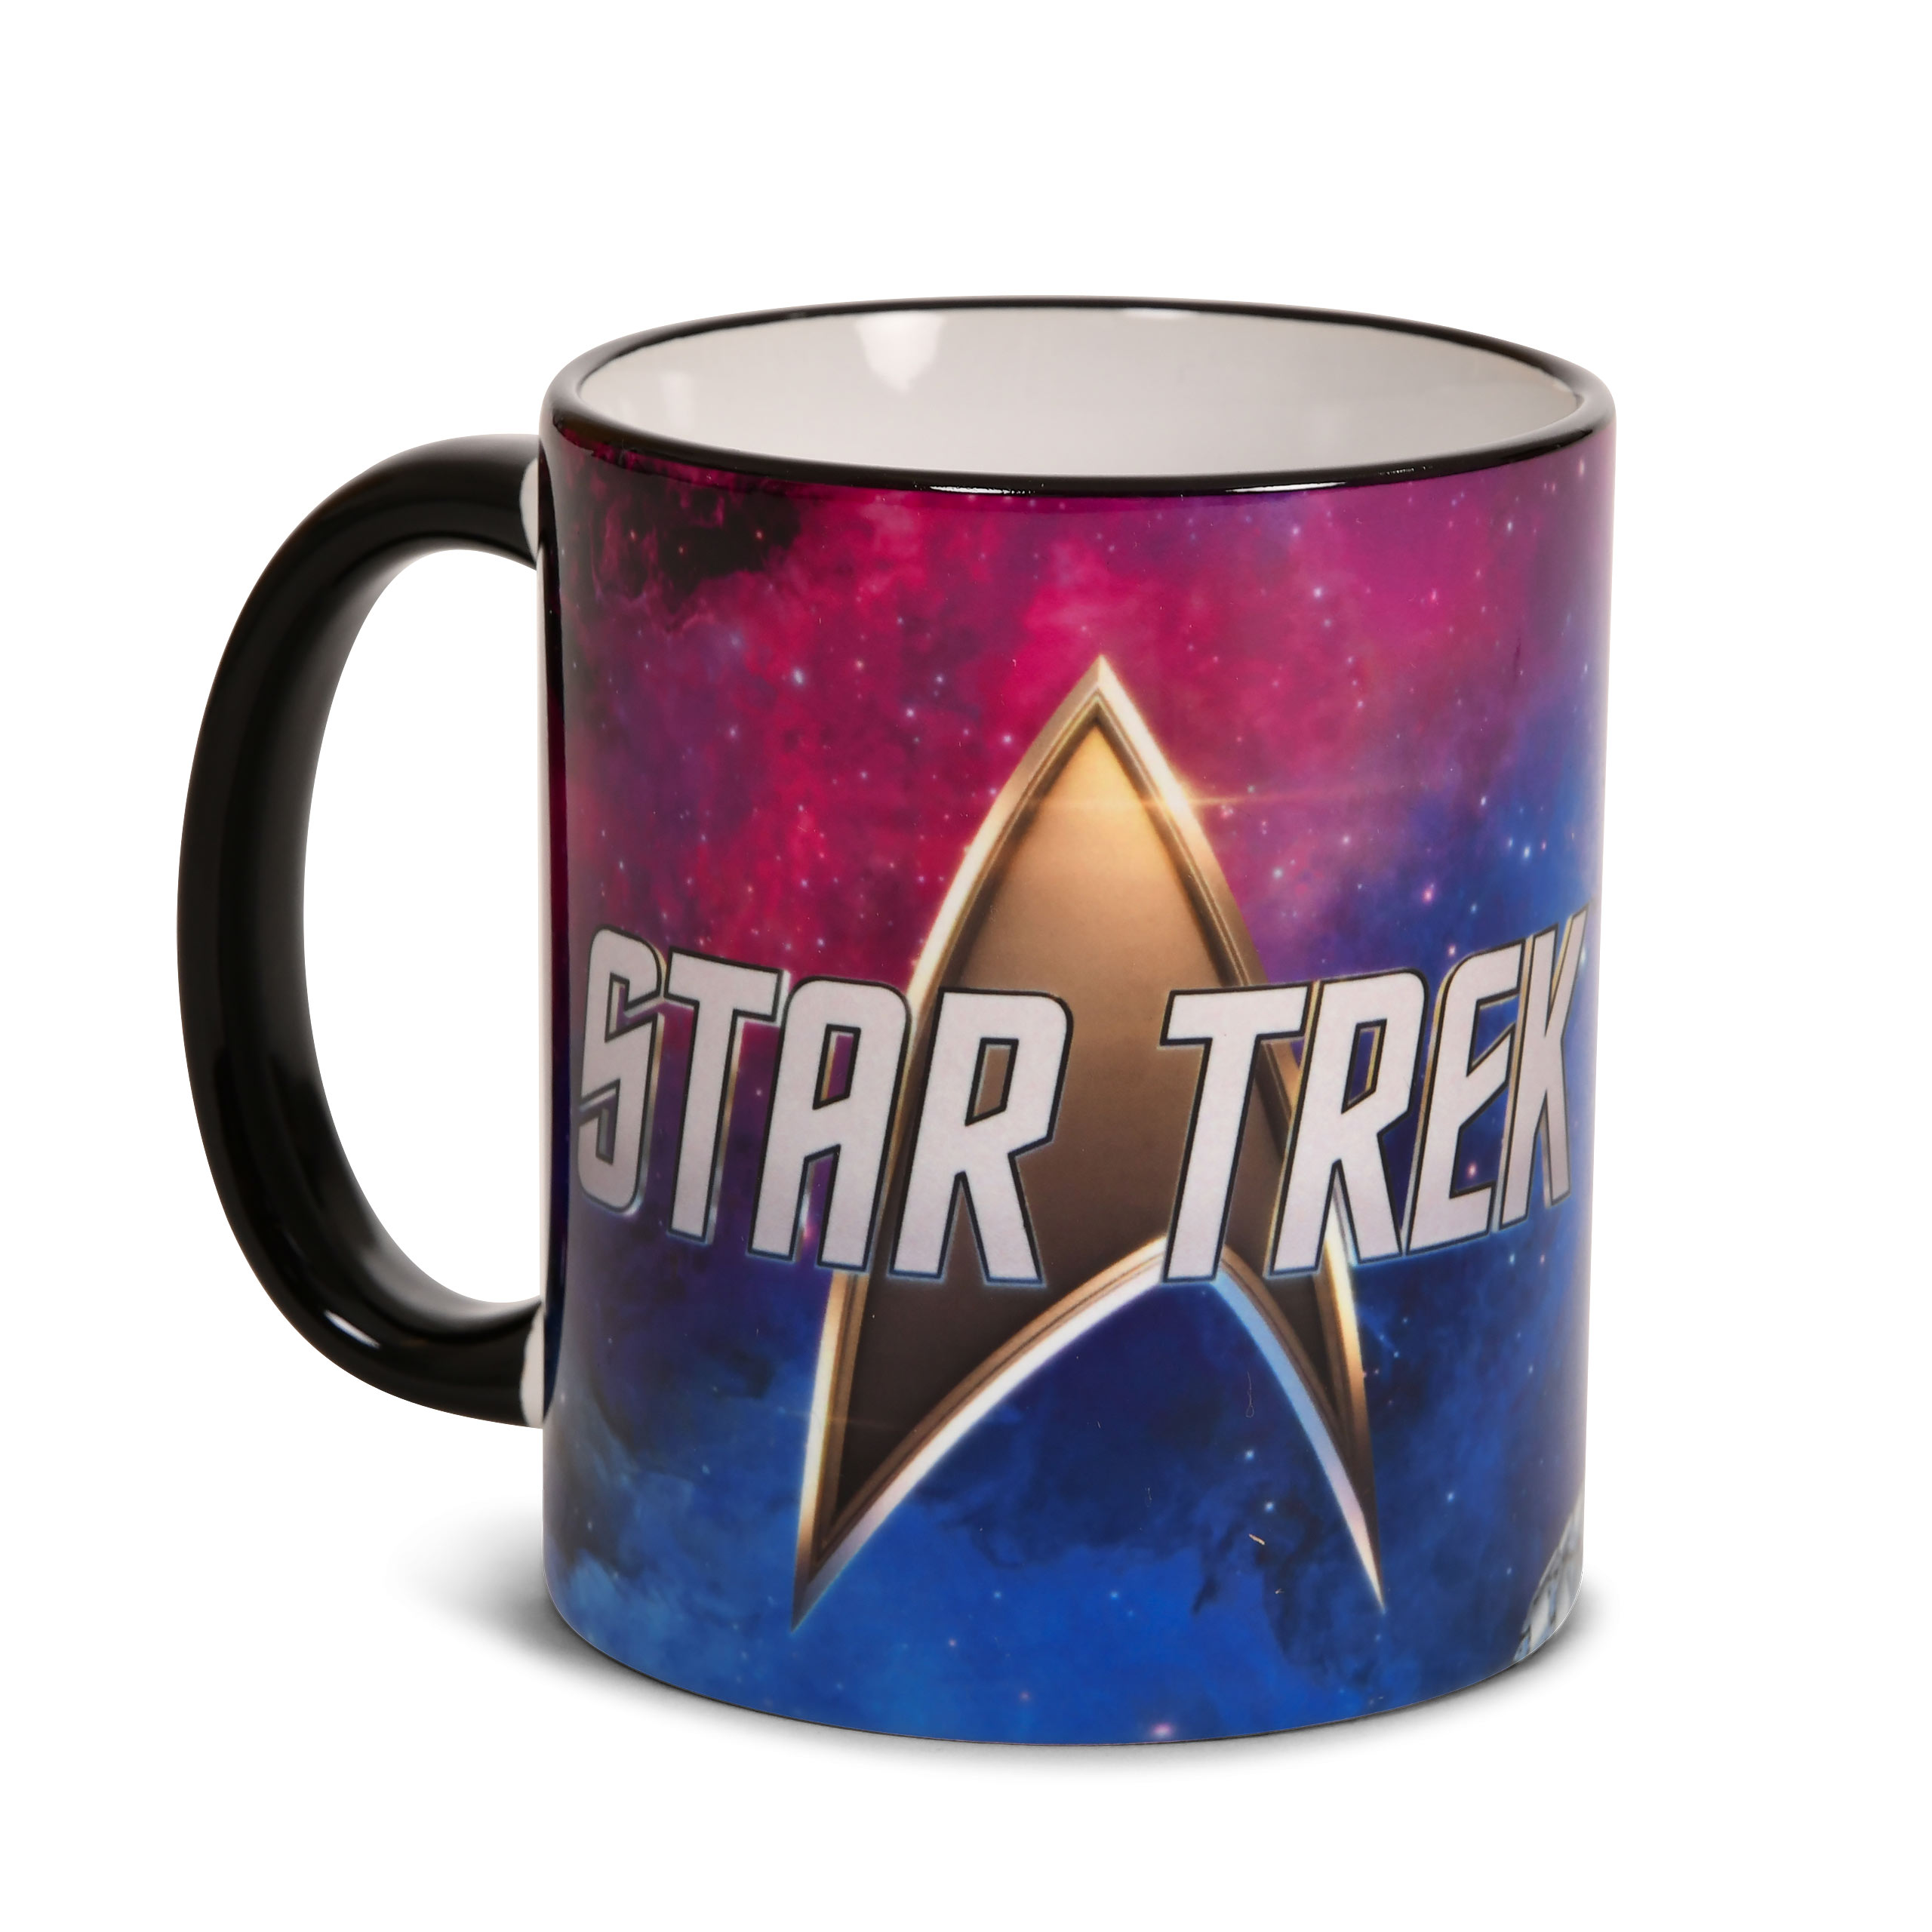 Star Trek - Worf Mug